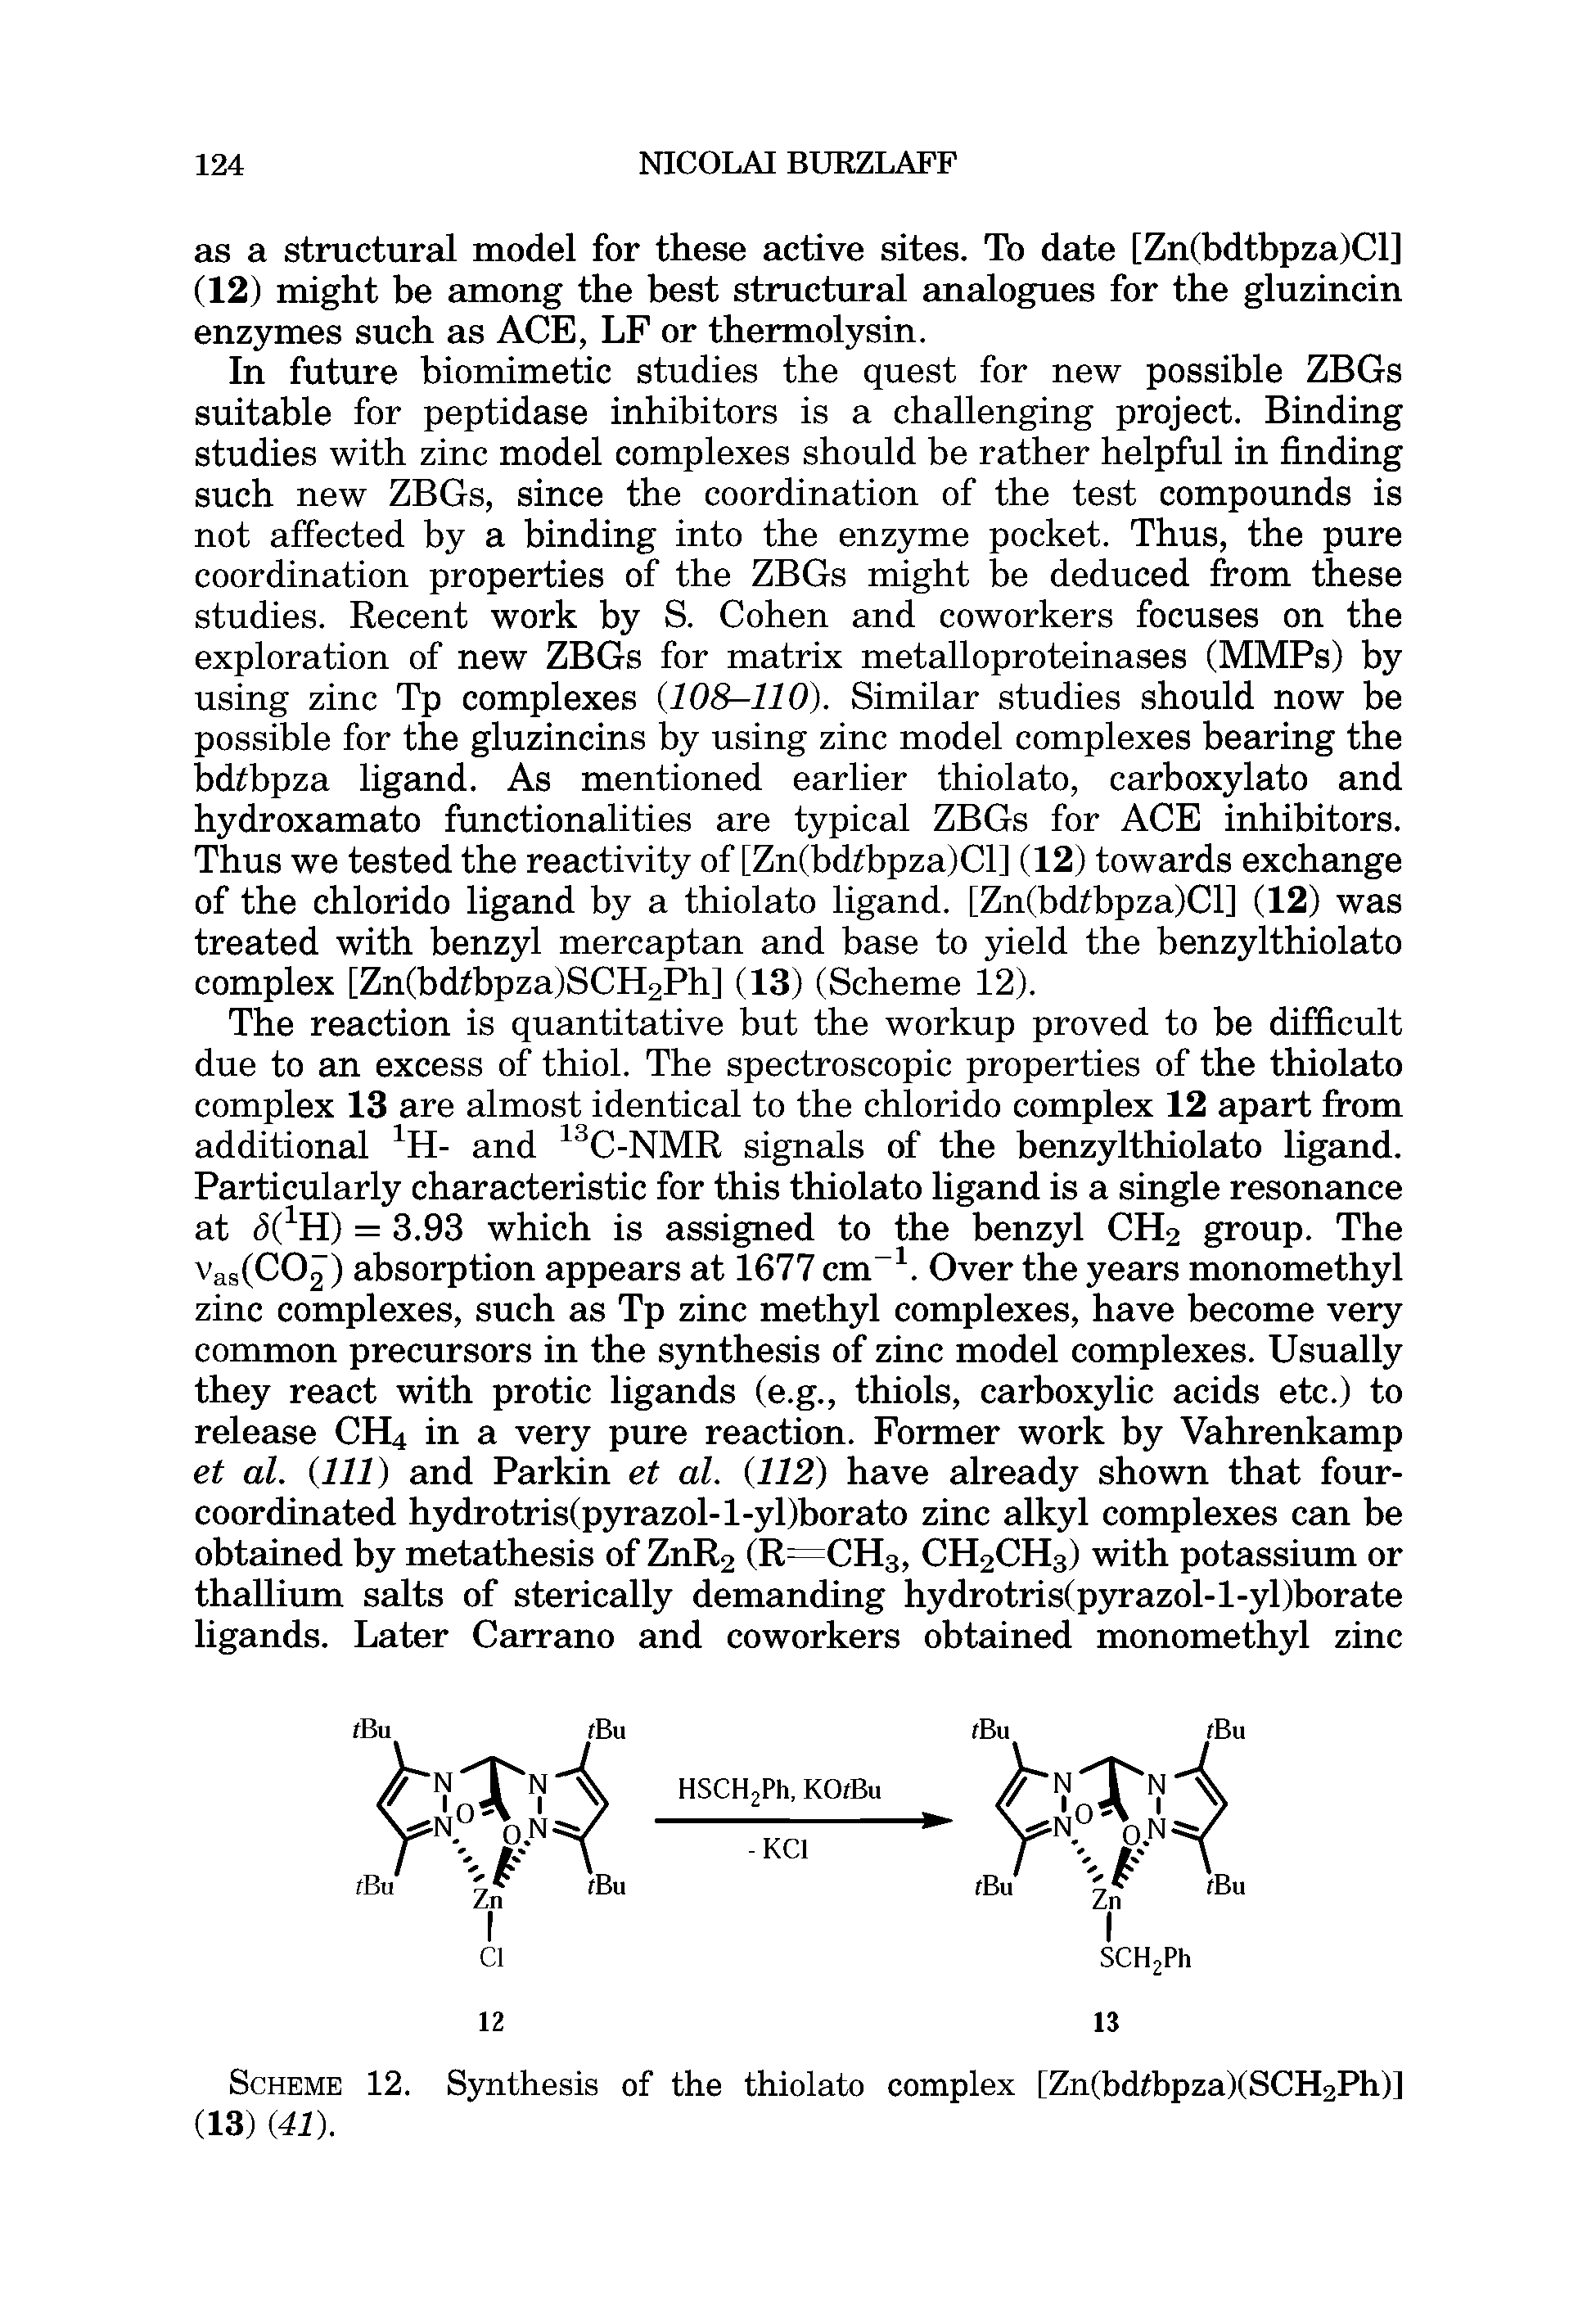 Scheme 12. Synthesis of the thiolato complex [Zn(hdthpza)(SCH2Ph)l (13) (41).